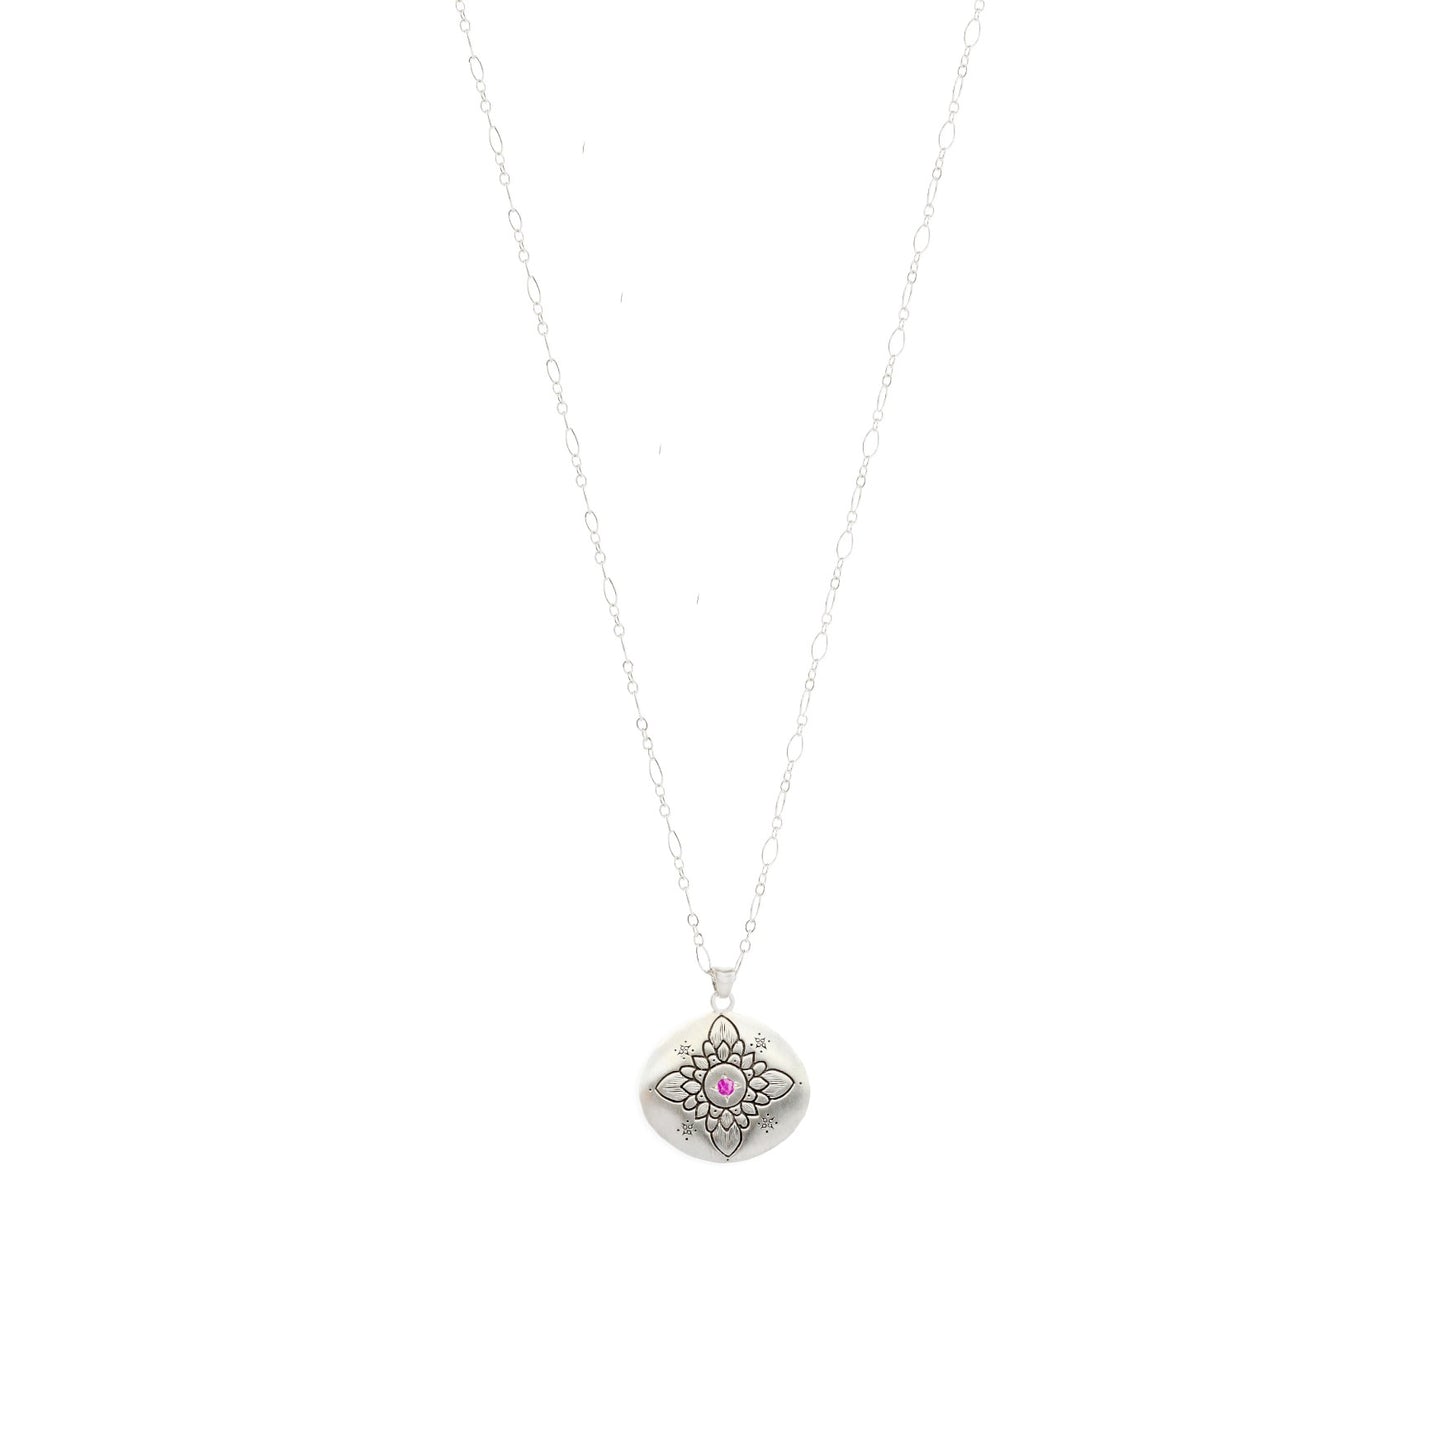 Adel Chefridi Studio | Pink Sapphire "Lotus" Pendant Necklace | Firecracker